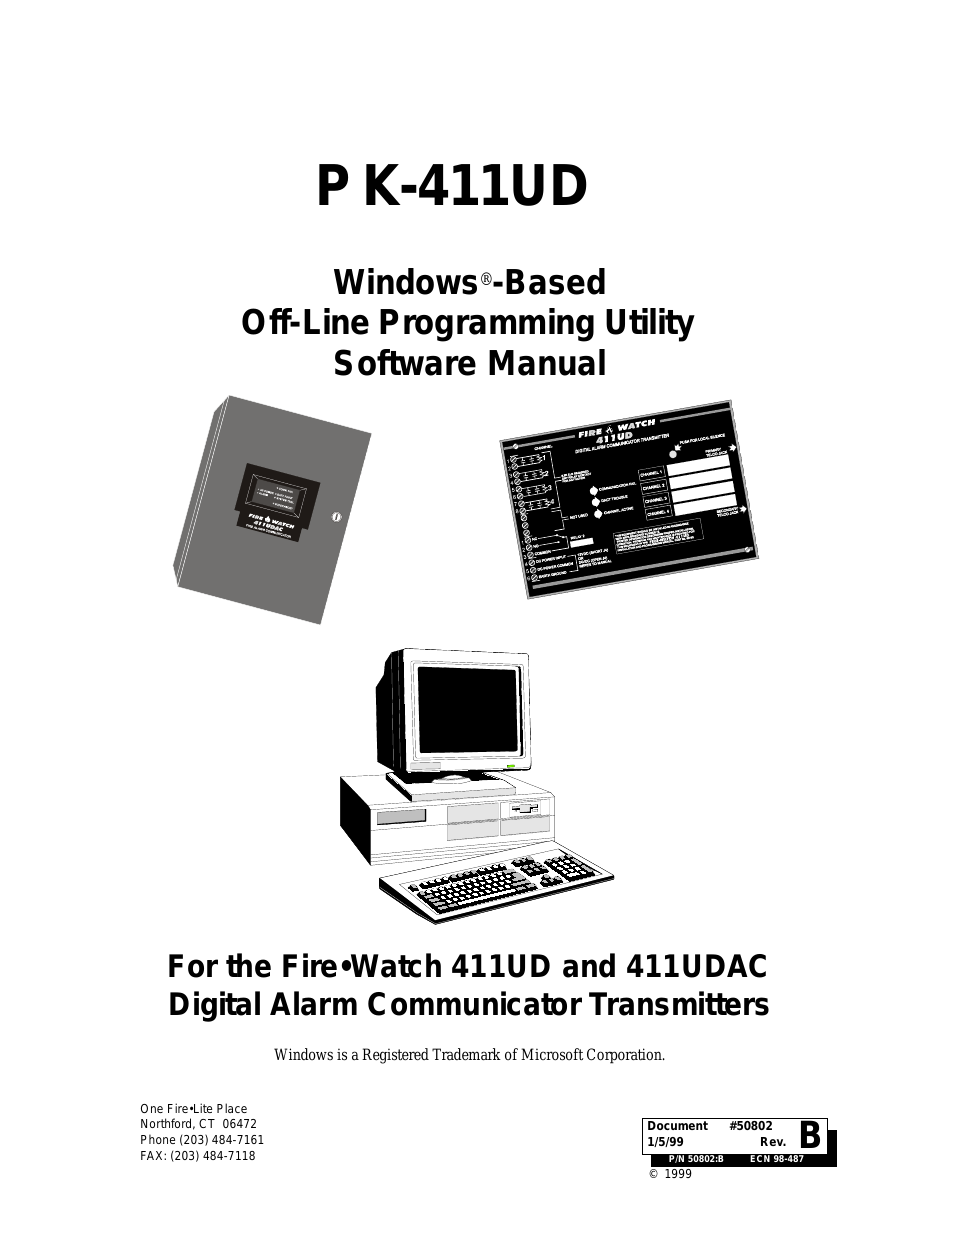 P K-411UD Windows-Based Off-Line Programming Utility